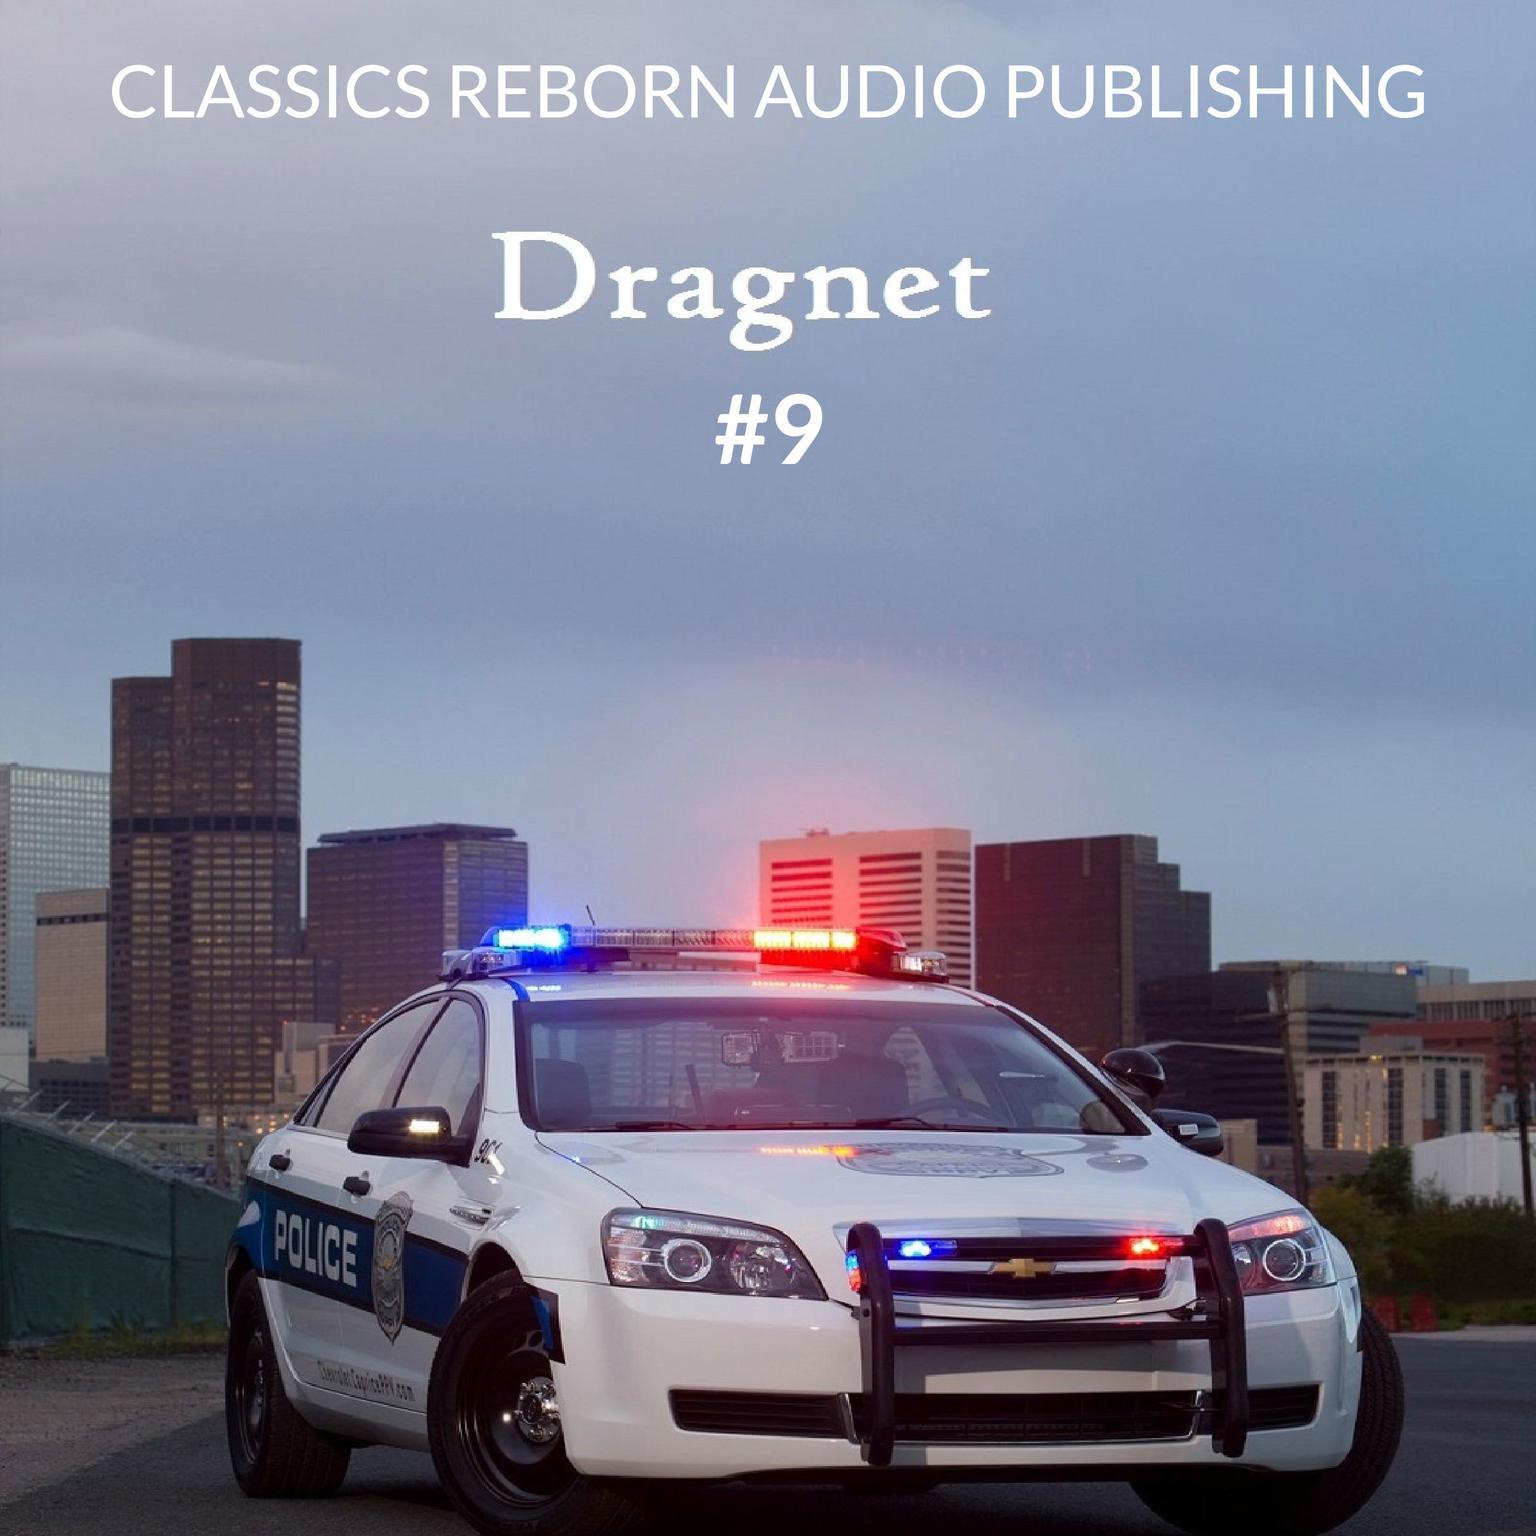 Detective: Dragnet #9 Audiobook, by Classics Reborn Audio Publishing